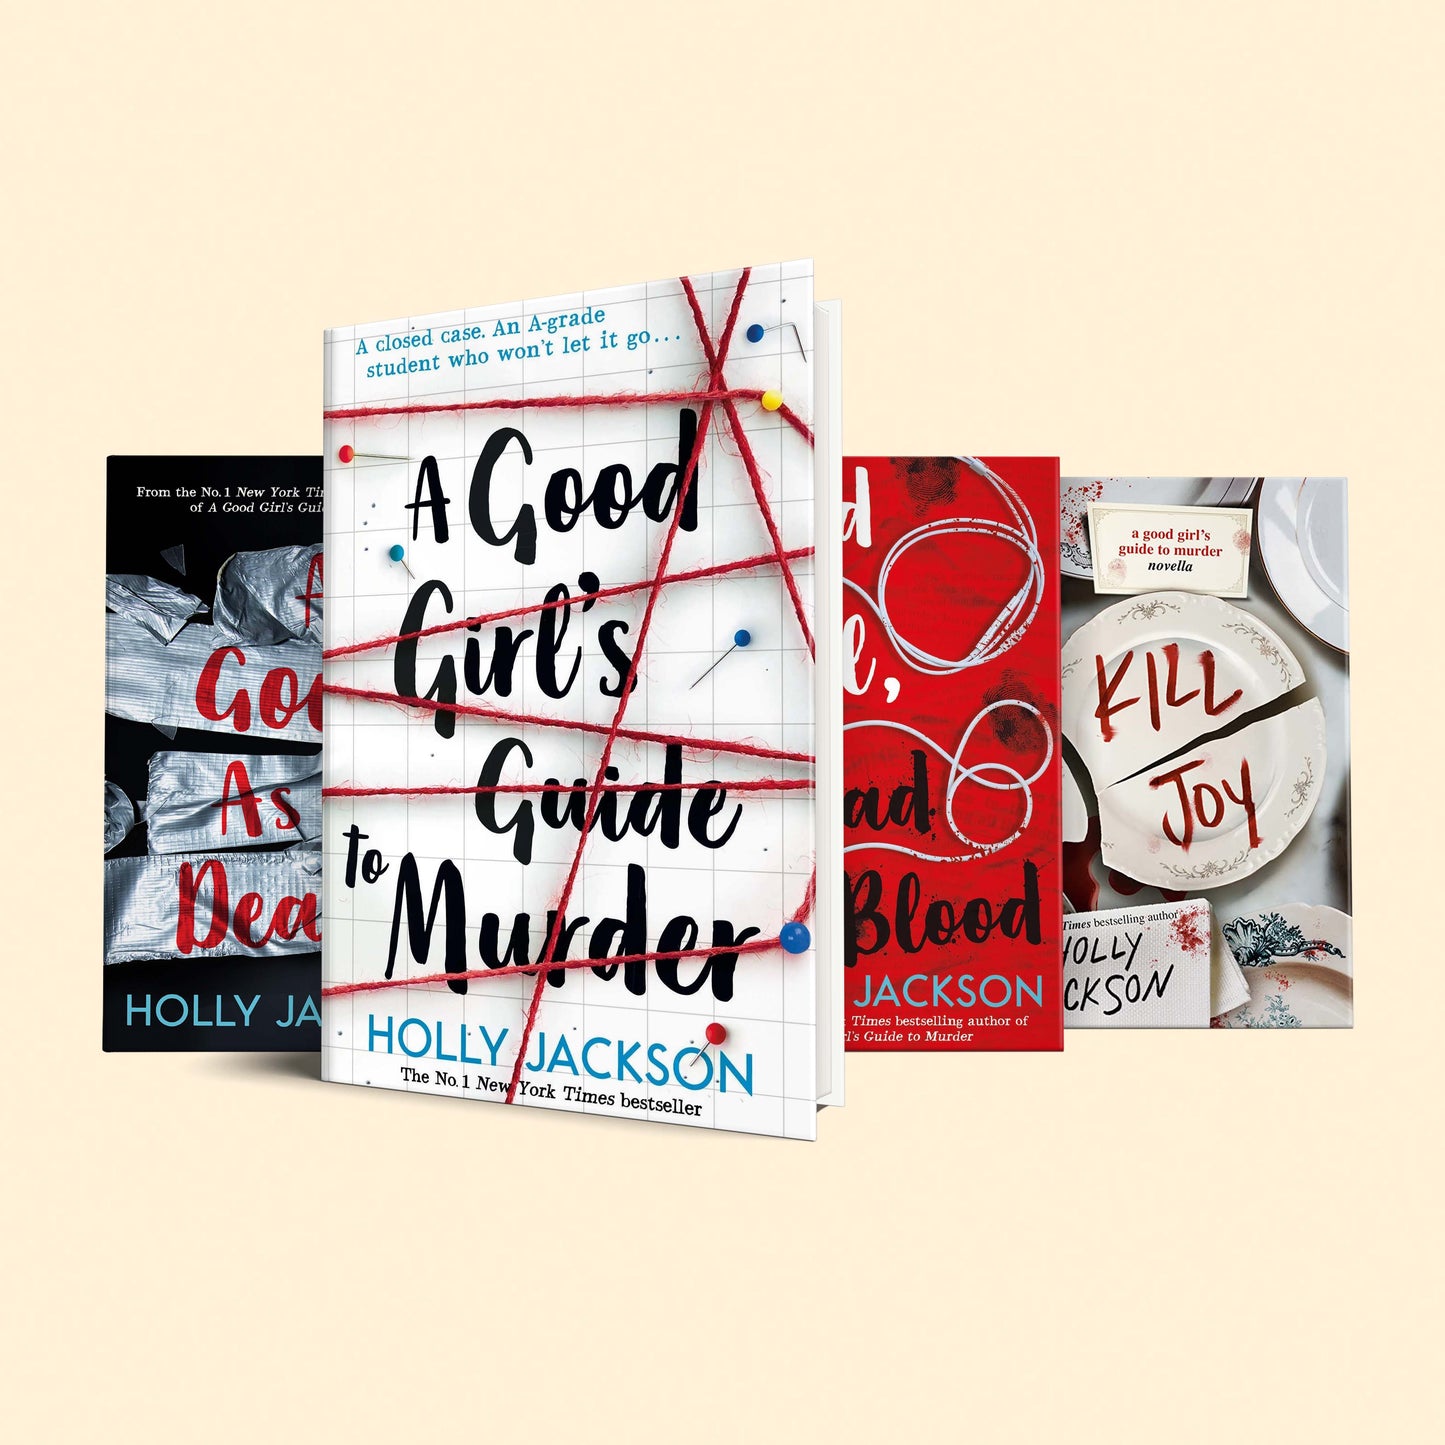 4 Holly Jackson books : A Good Girl's Guide to Murder, Good Girl Bad Blood, As Good as Dead, Kill joy